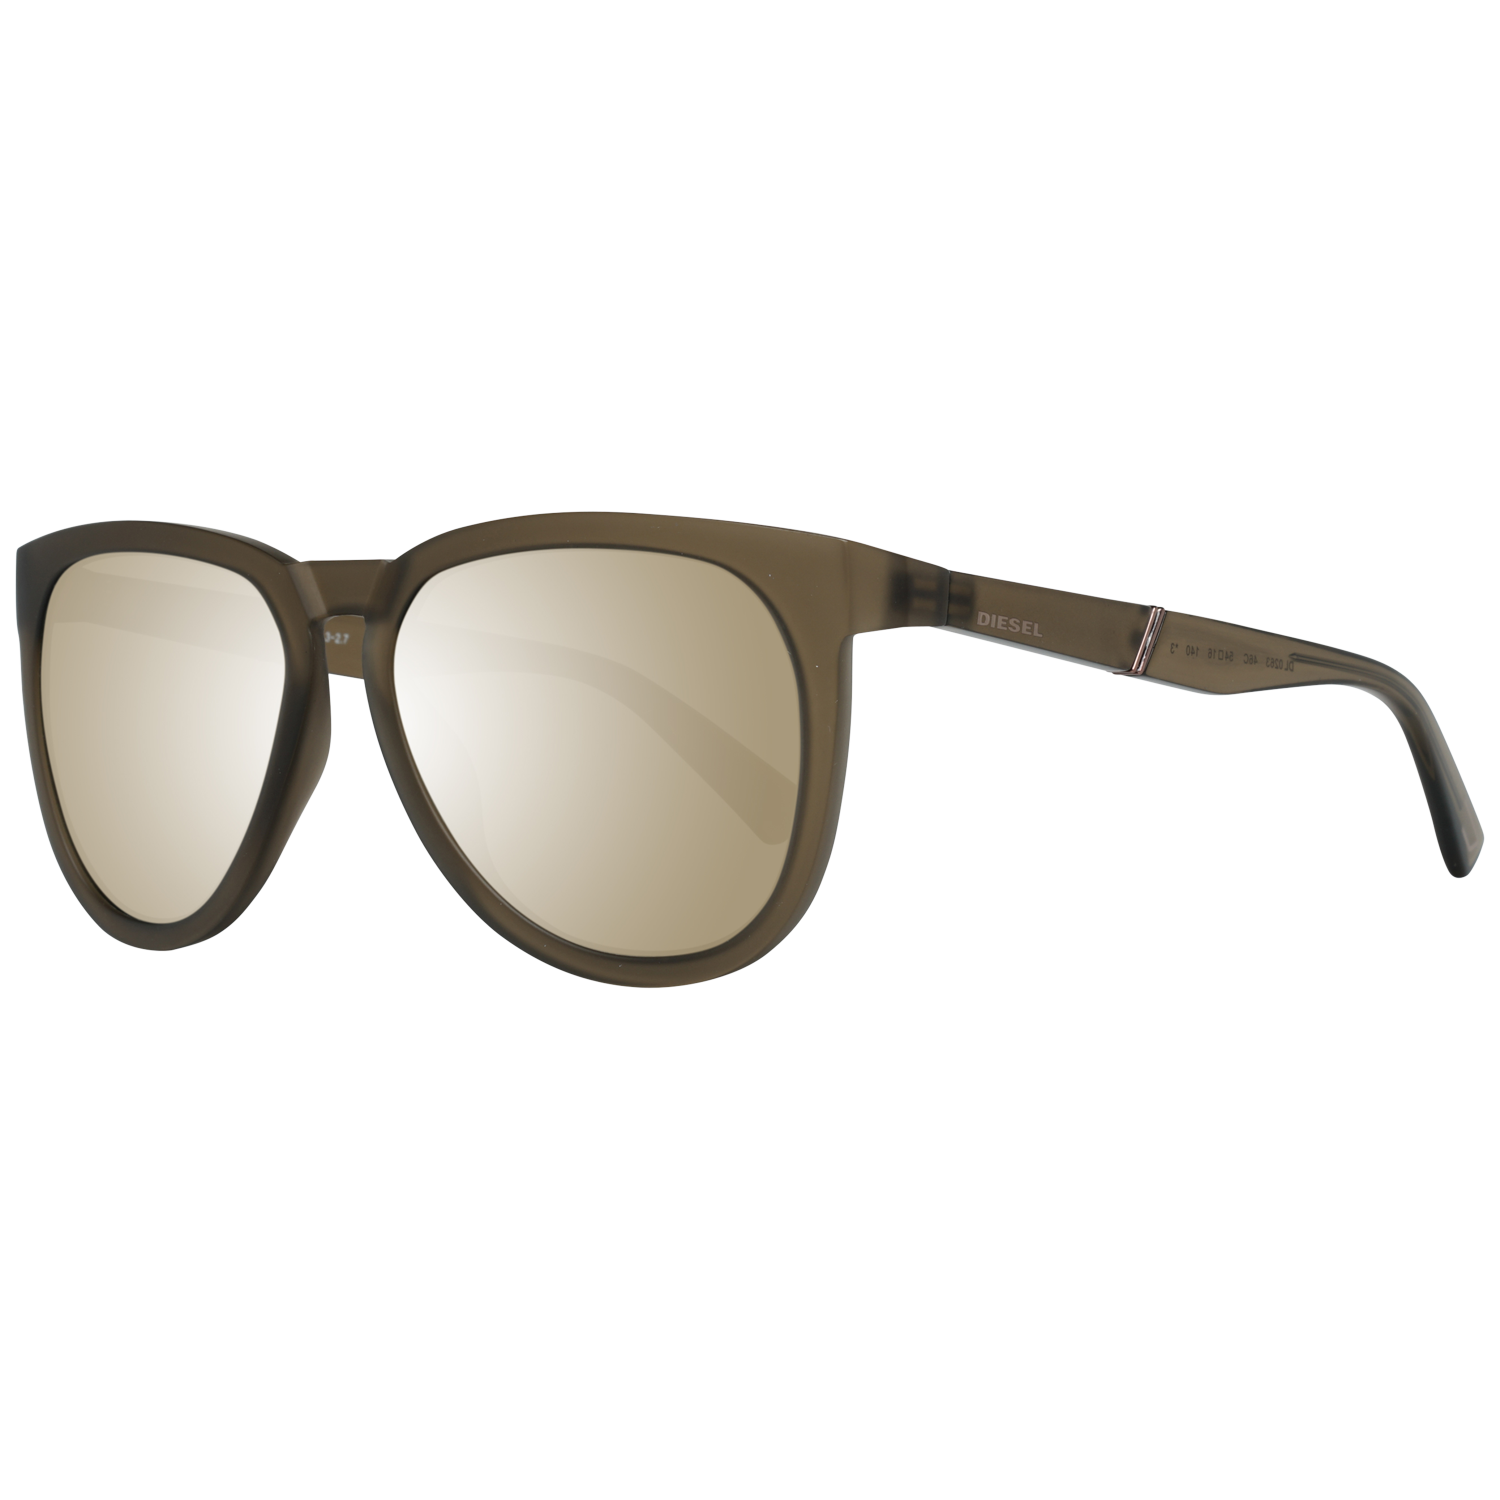 Diesel Sunglasses DL0263 46C 54